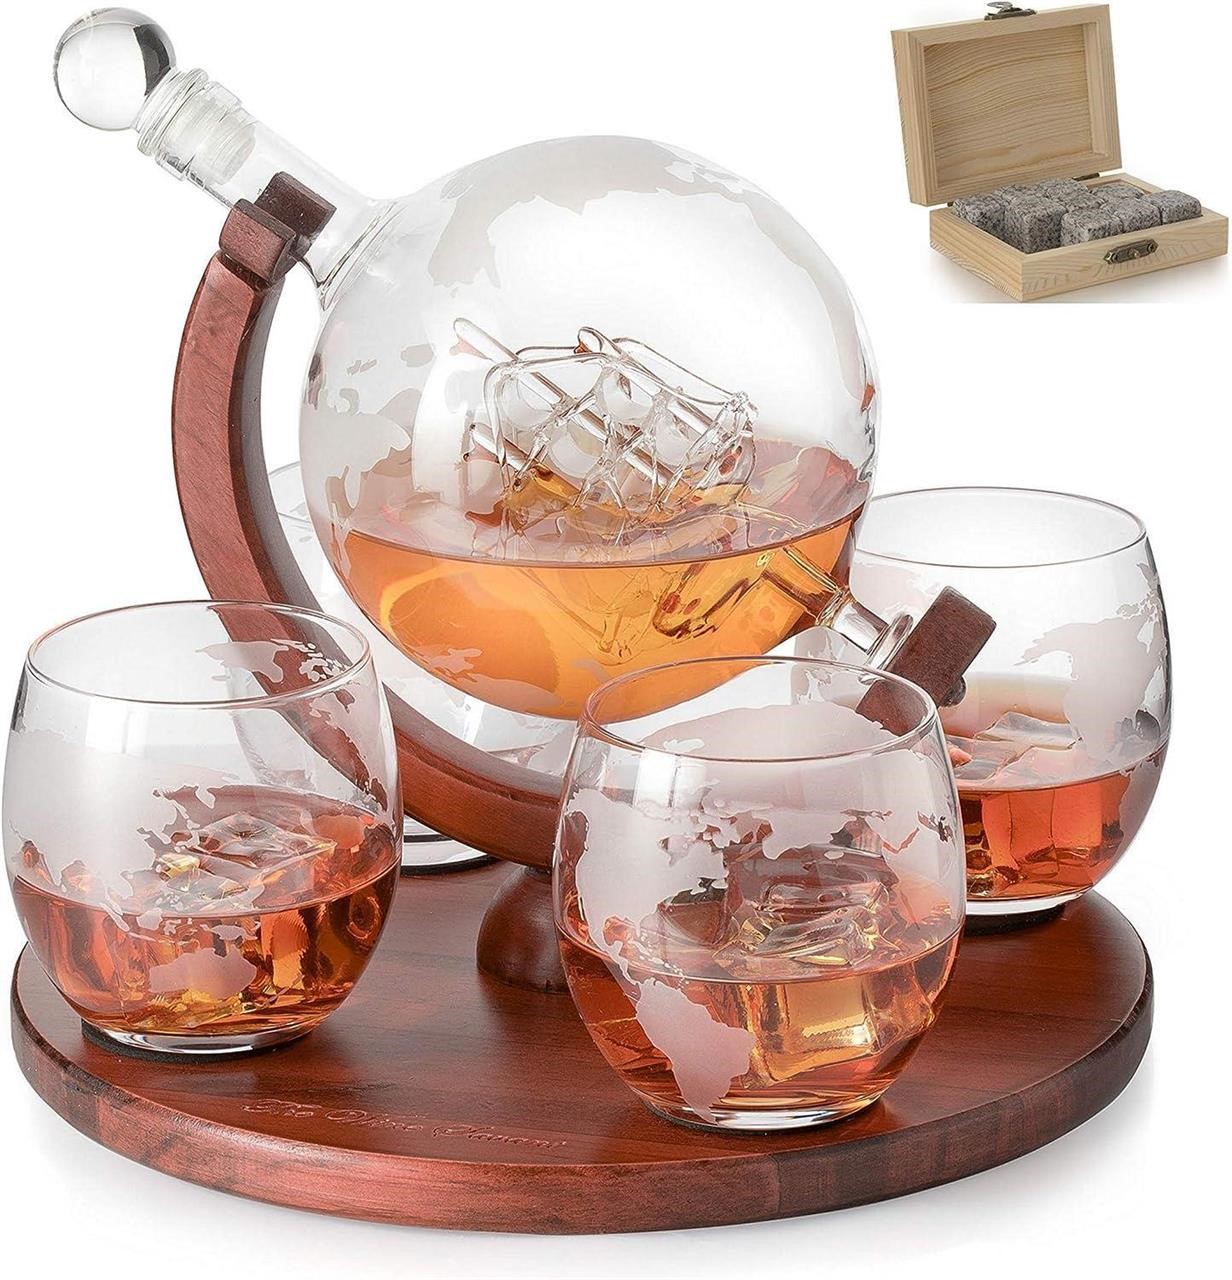 AS IS-Savant Whiskey Globe Decanter Set